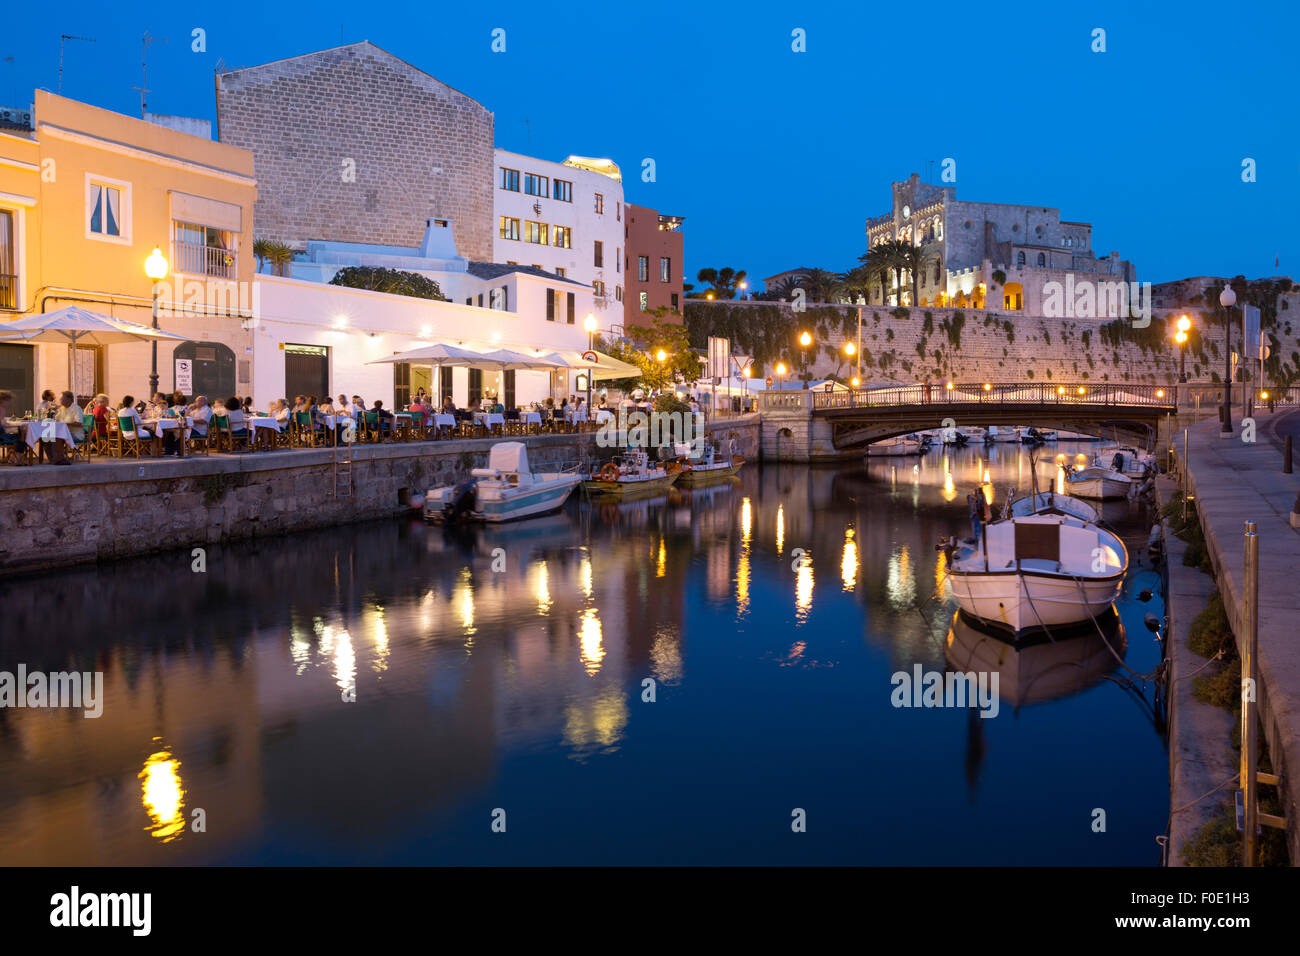 Restaurant S' Amarador and Ayuntamiento de Ciutadella at night, Ciutadella, Menorca, Balearic Islands, Spain, Europe Stock Photo